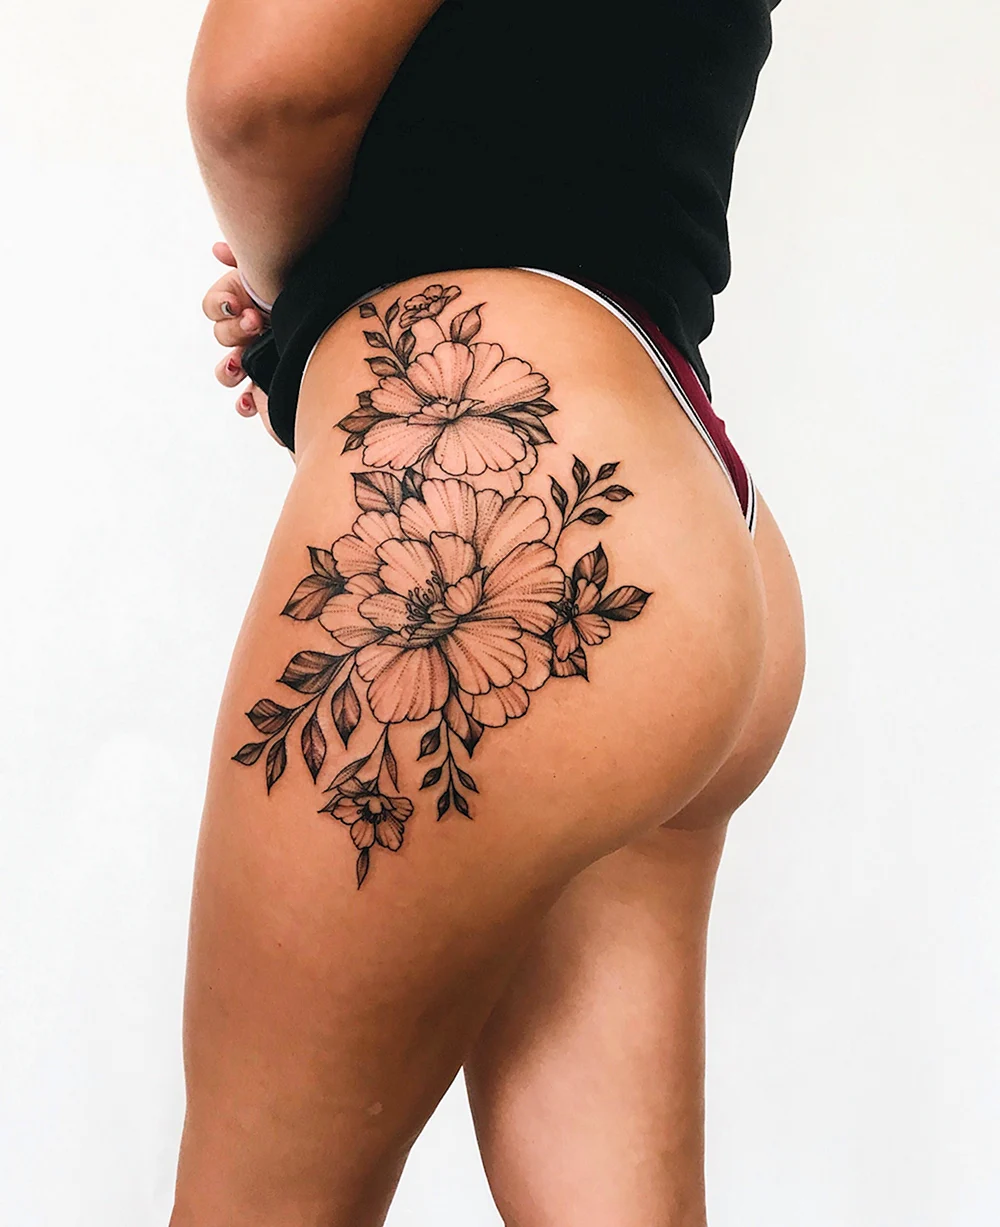 Women thigh Tattoos